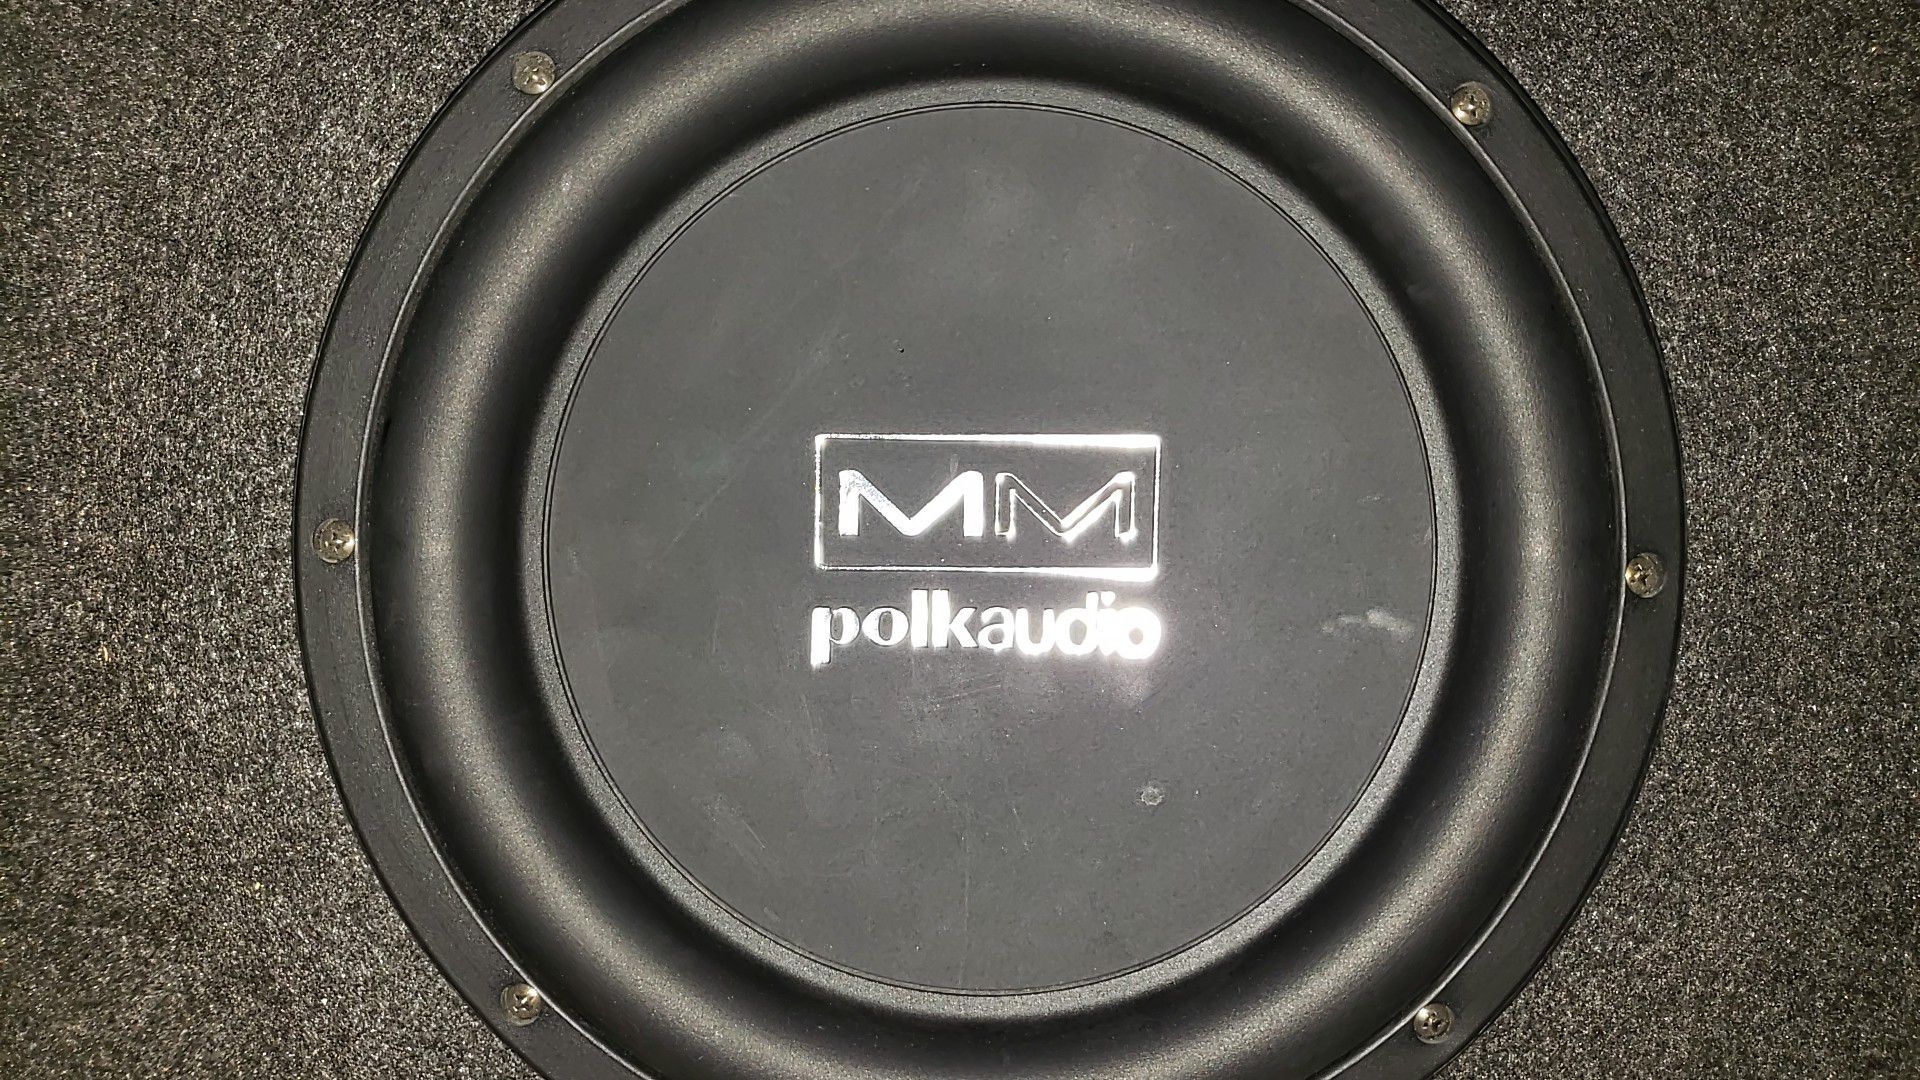 MM Polk audio Subwoofer